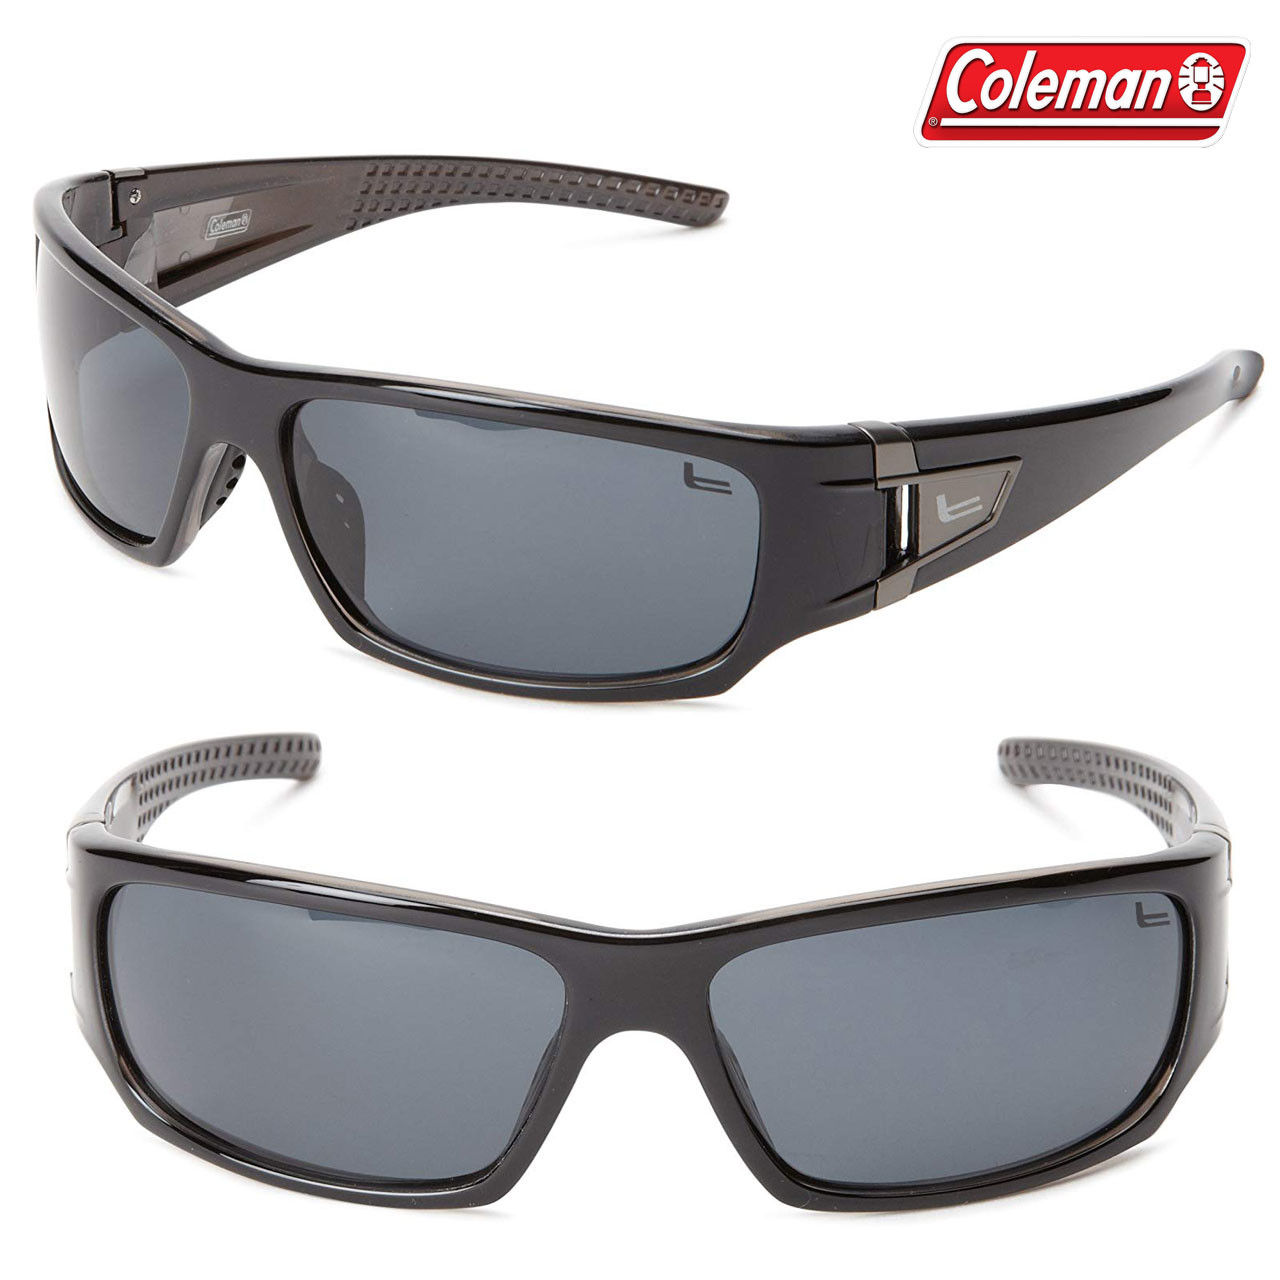 Coleman Grizzly Polarized Sunglasses- Black/Smoke